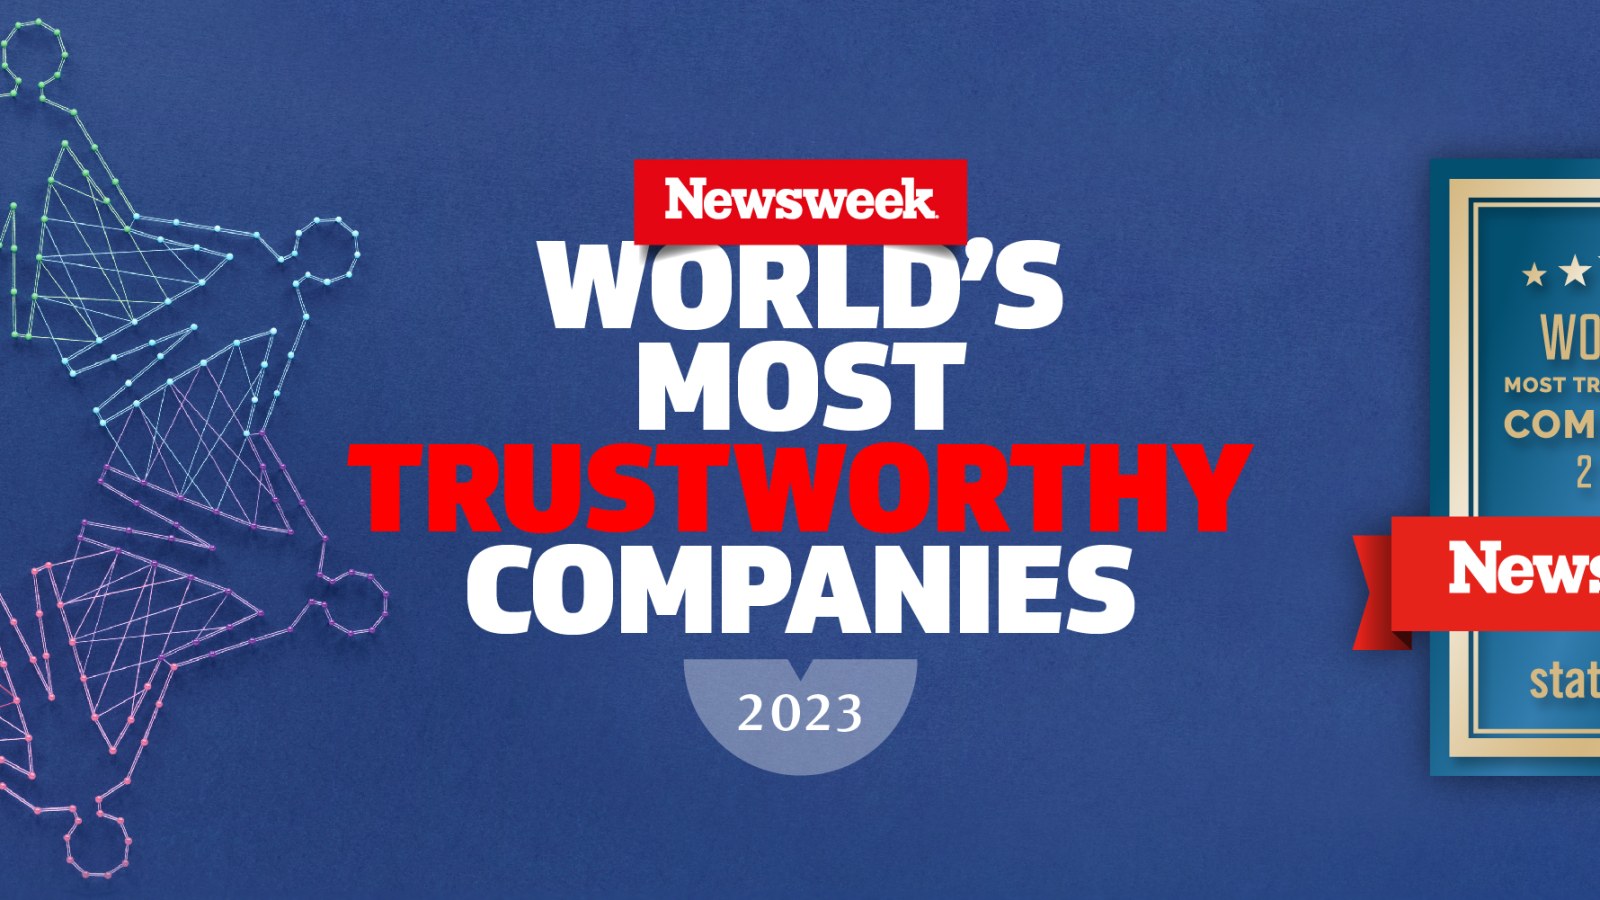 World's Most Trustworthy Companies 2023